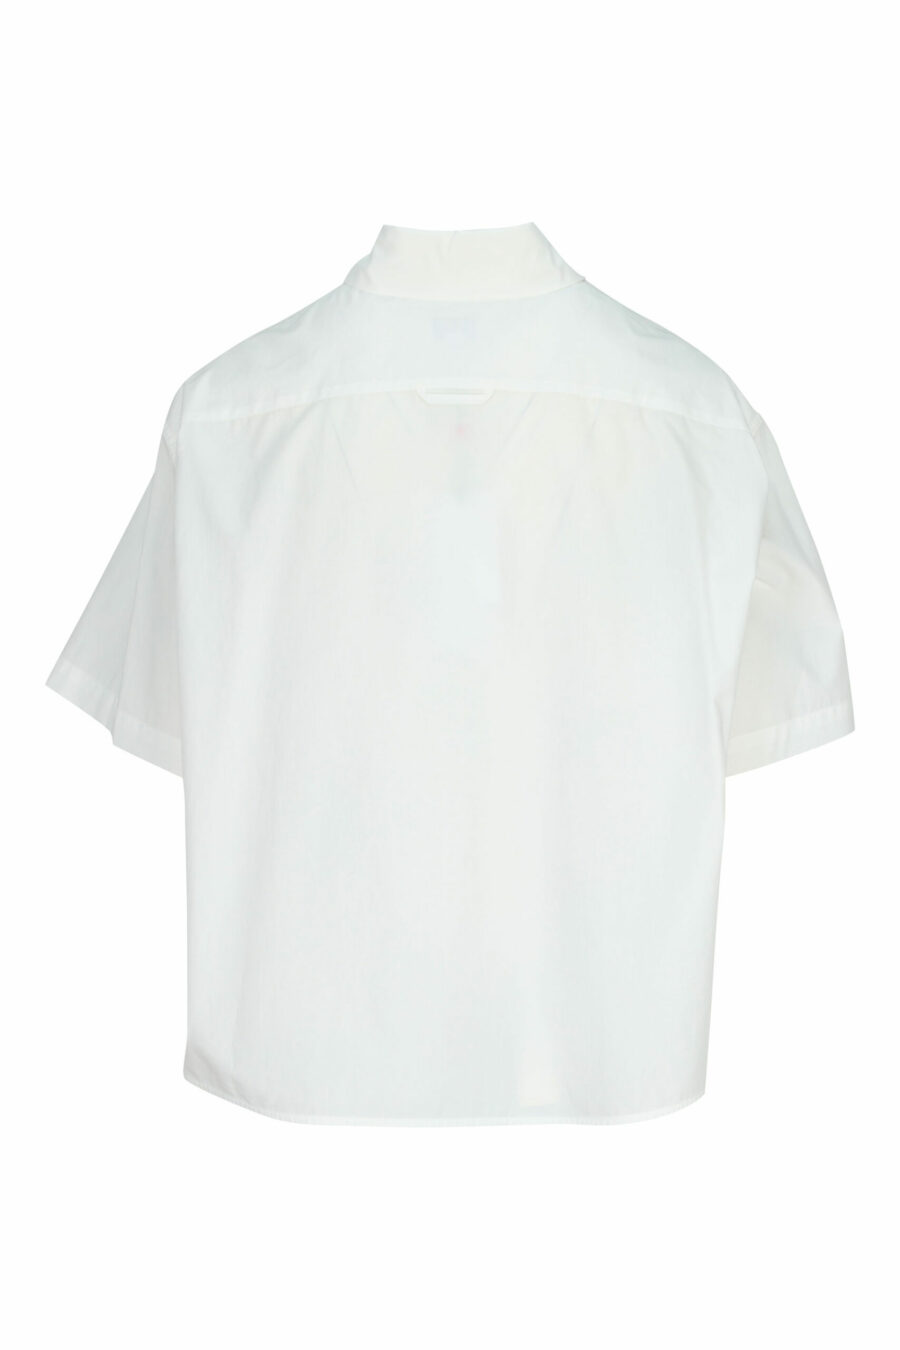 Weißes Kurzarm-Shirt mit schwarzem "boke flower" Mini-Logo - 3612230589063 1 skaliert